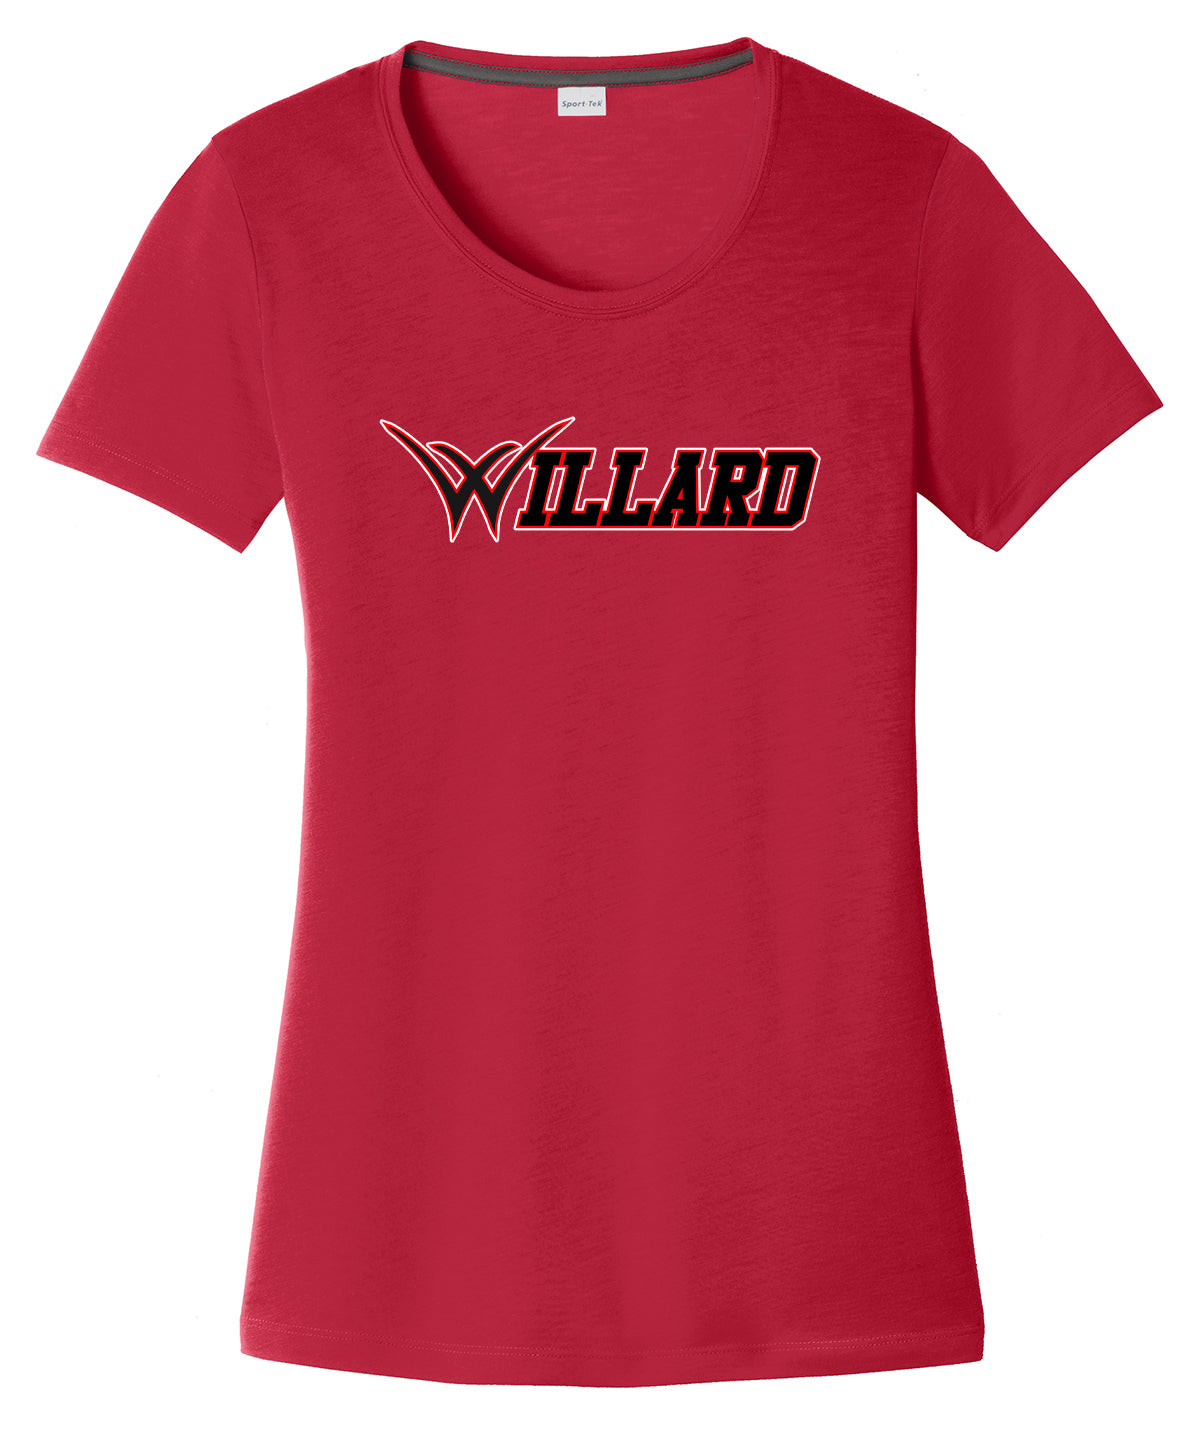 Willard Tigers Baseball Women's CottonTouch Performance T-Shirt